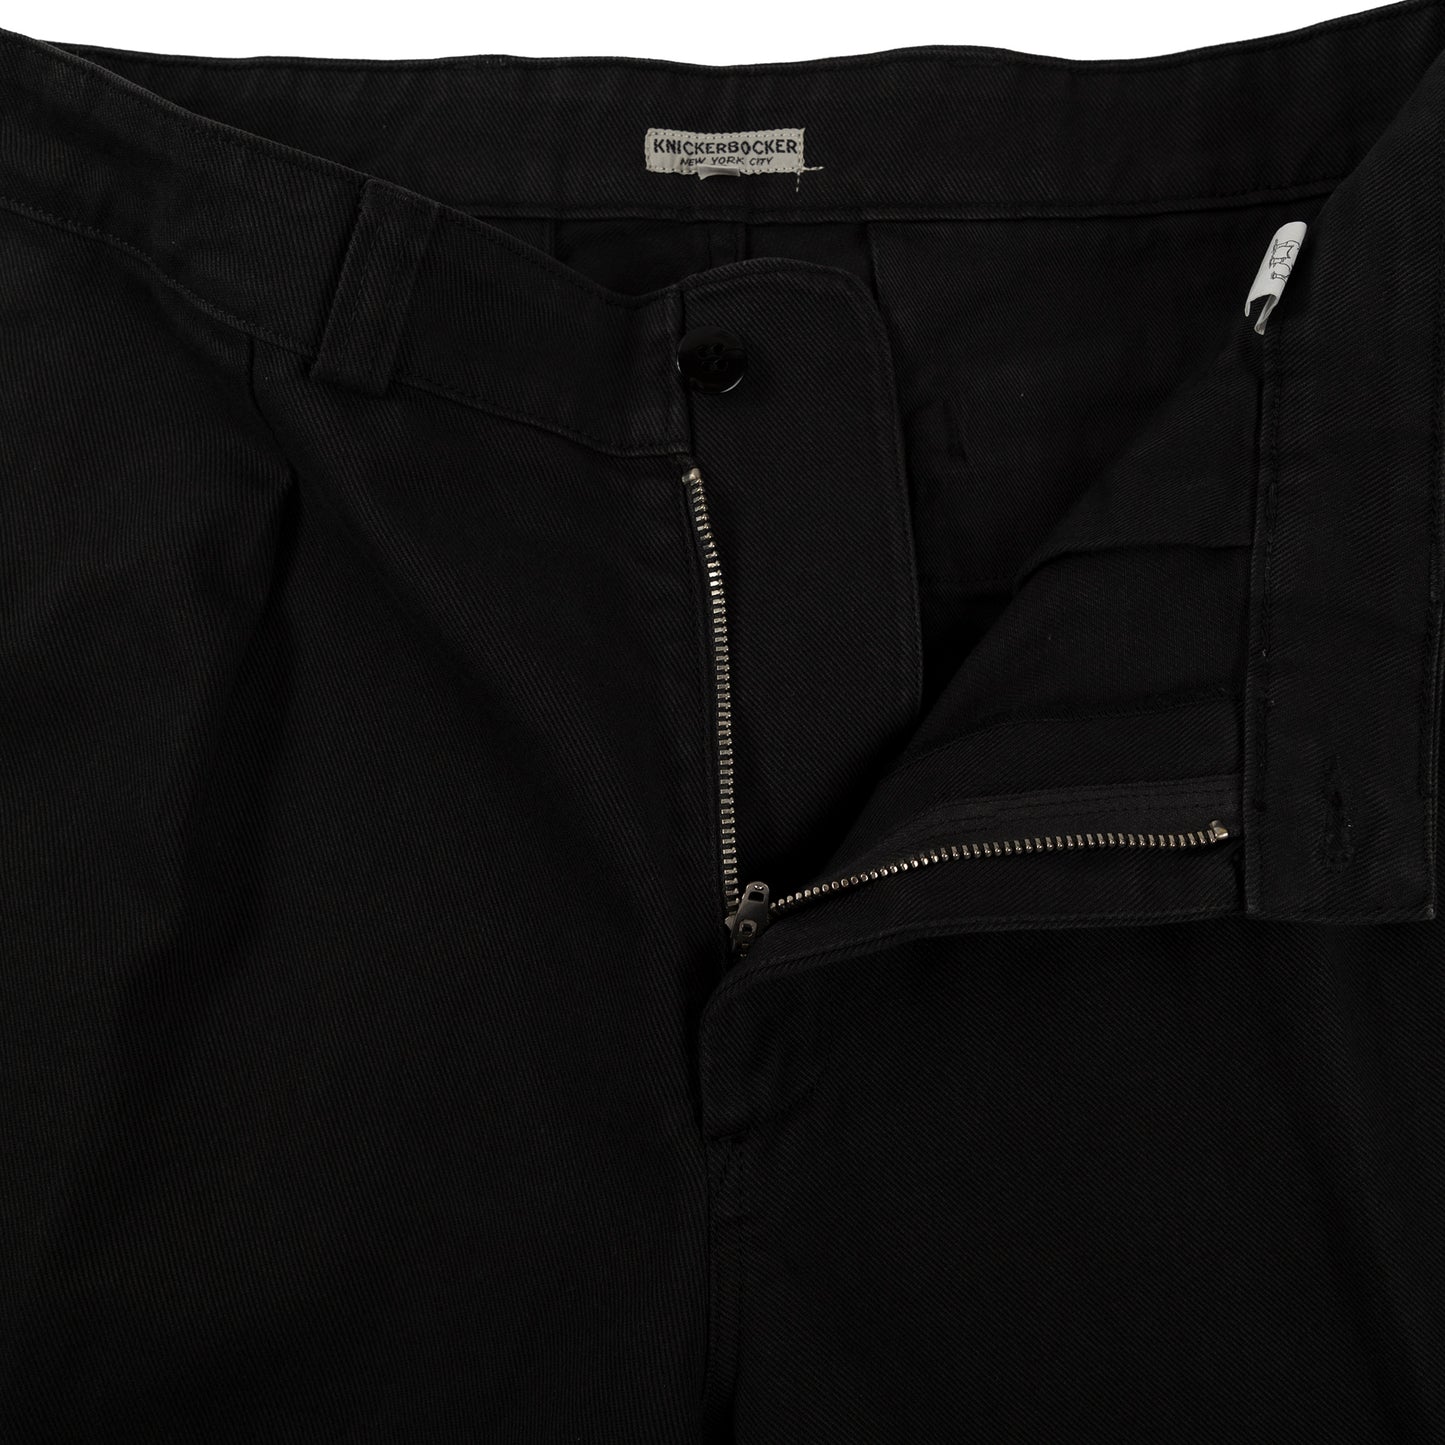 knickerbocker livingstone pant in black bottoms pants waist detail